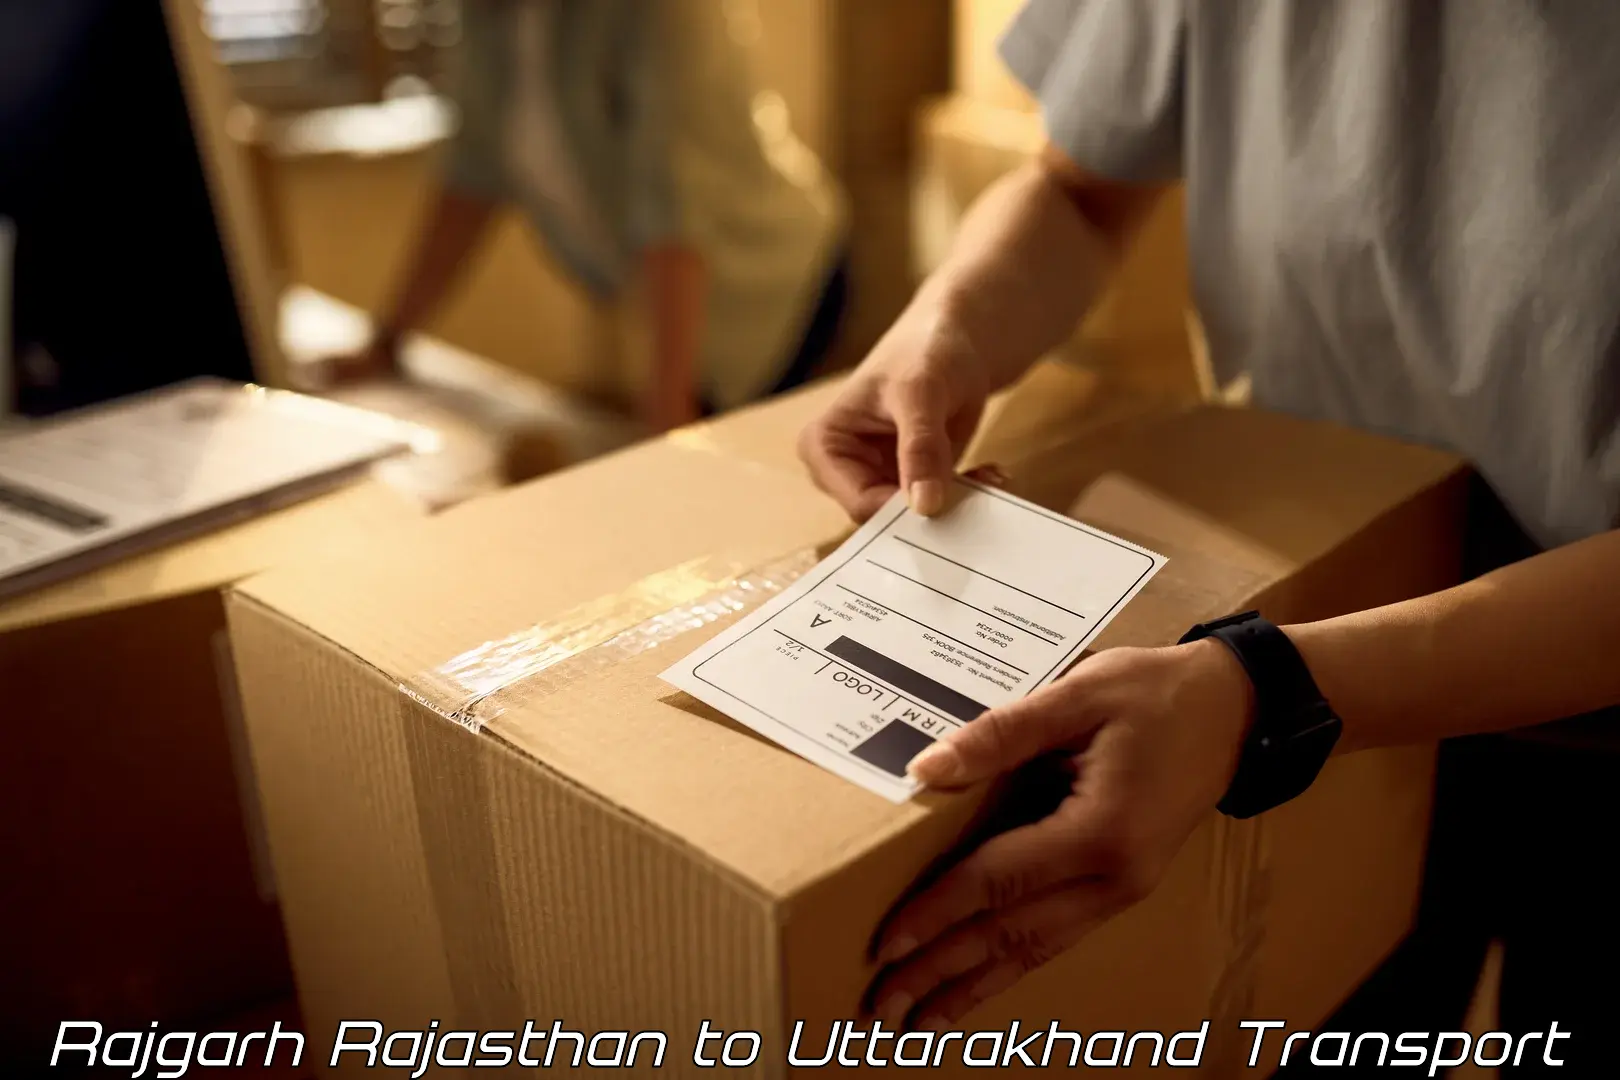 Truck transport companies in India Rajgarh Rajasthan to Uttarakhand